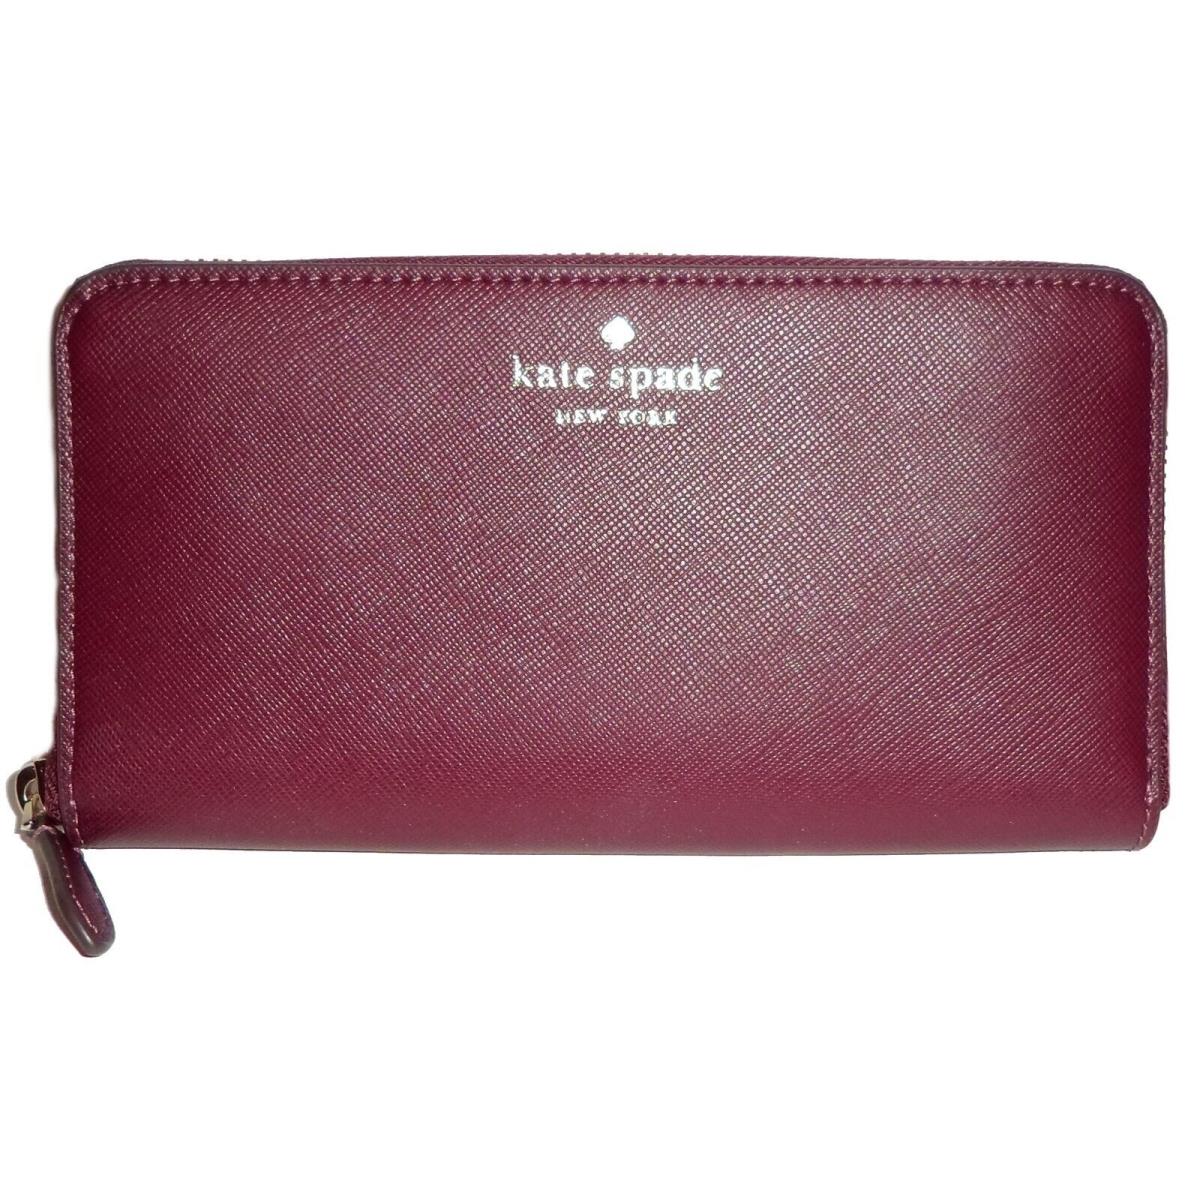 Kate Spade Brynn Deep Berry Saffiano Leather Zip-around Clutch Wallet